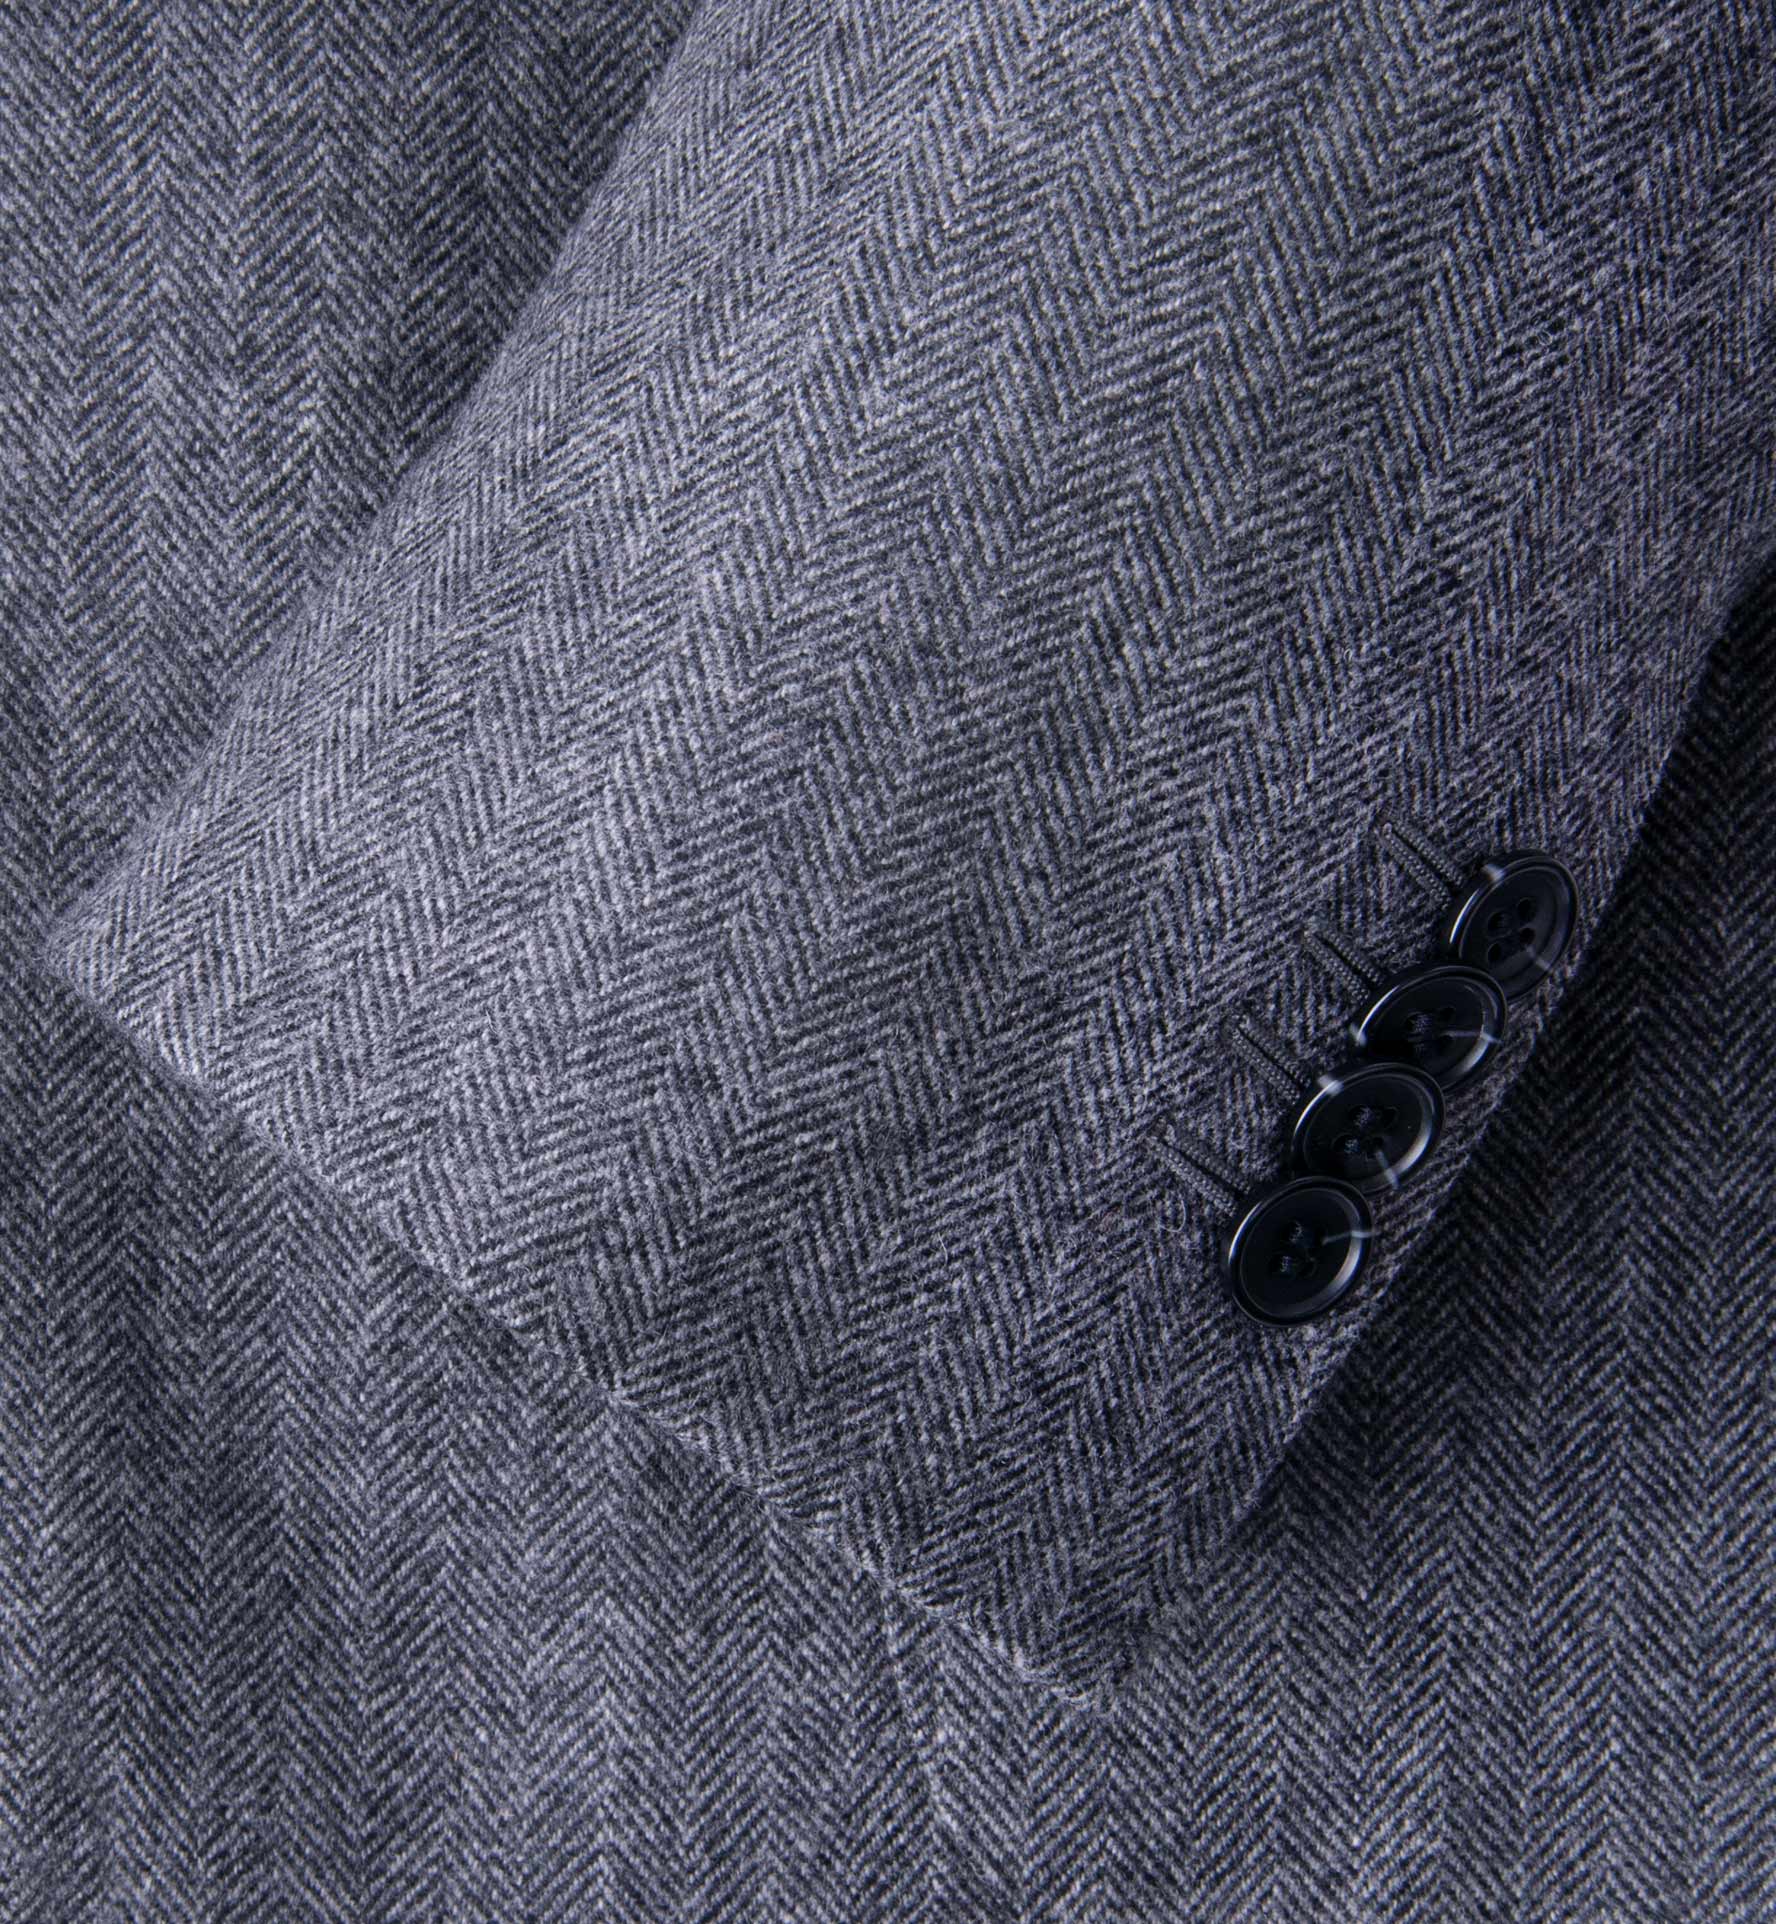 Grey Wool Cashmere Herringbone Hudson Jacket by Proper Cloth